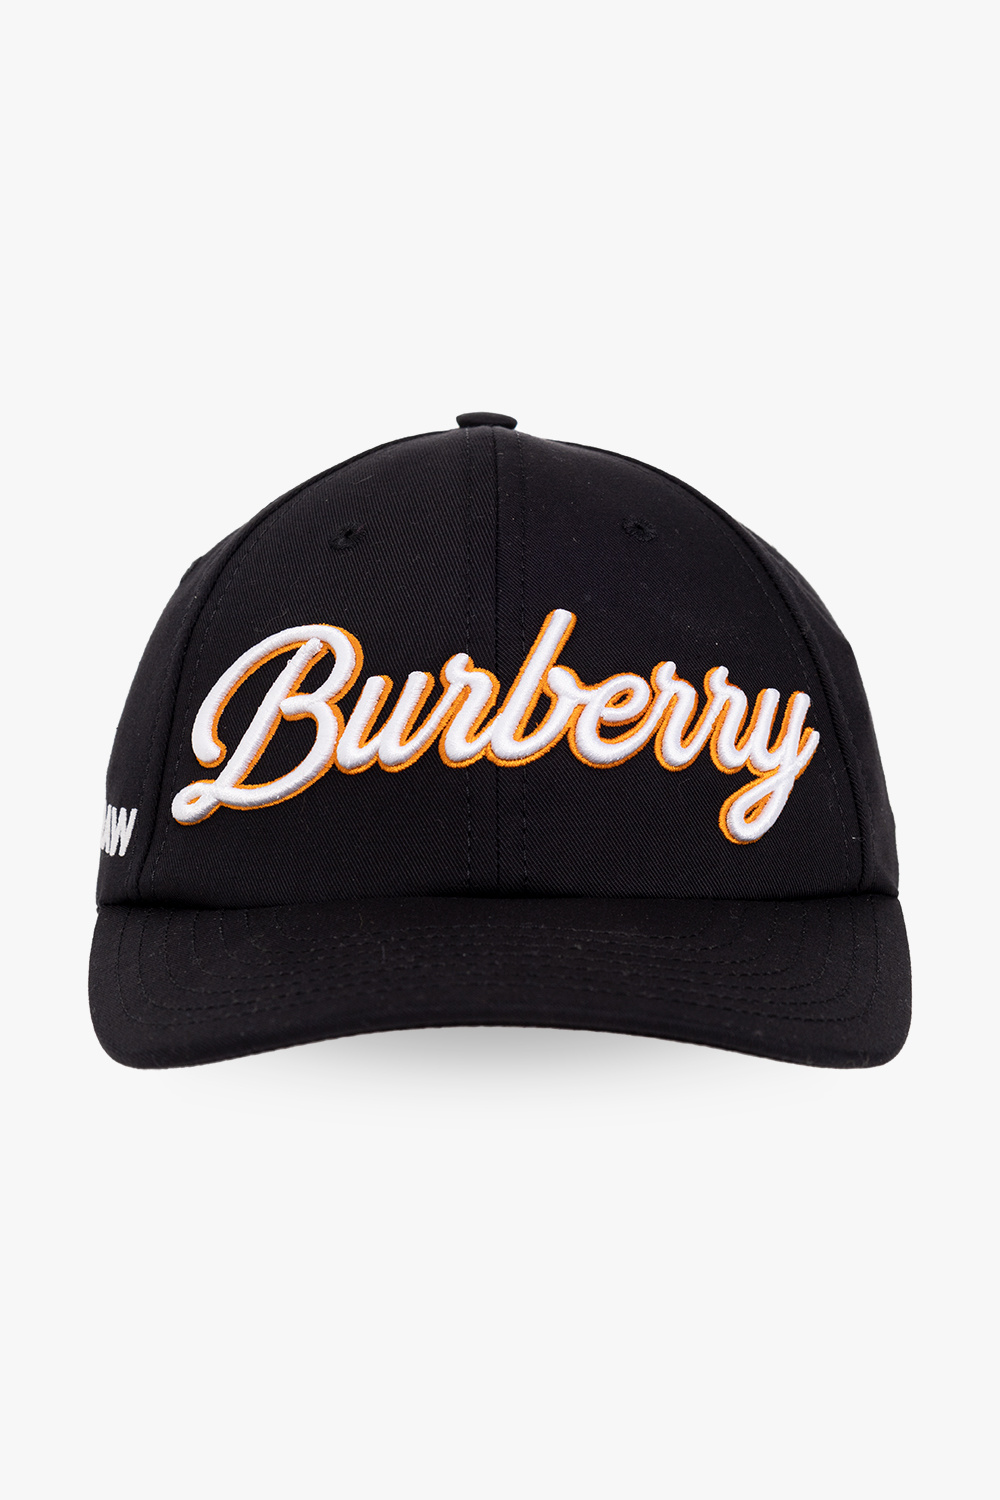 burberry blue Baseball cap